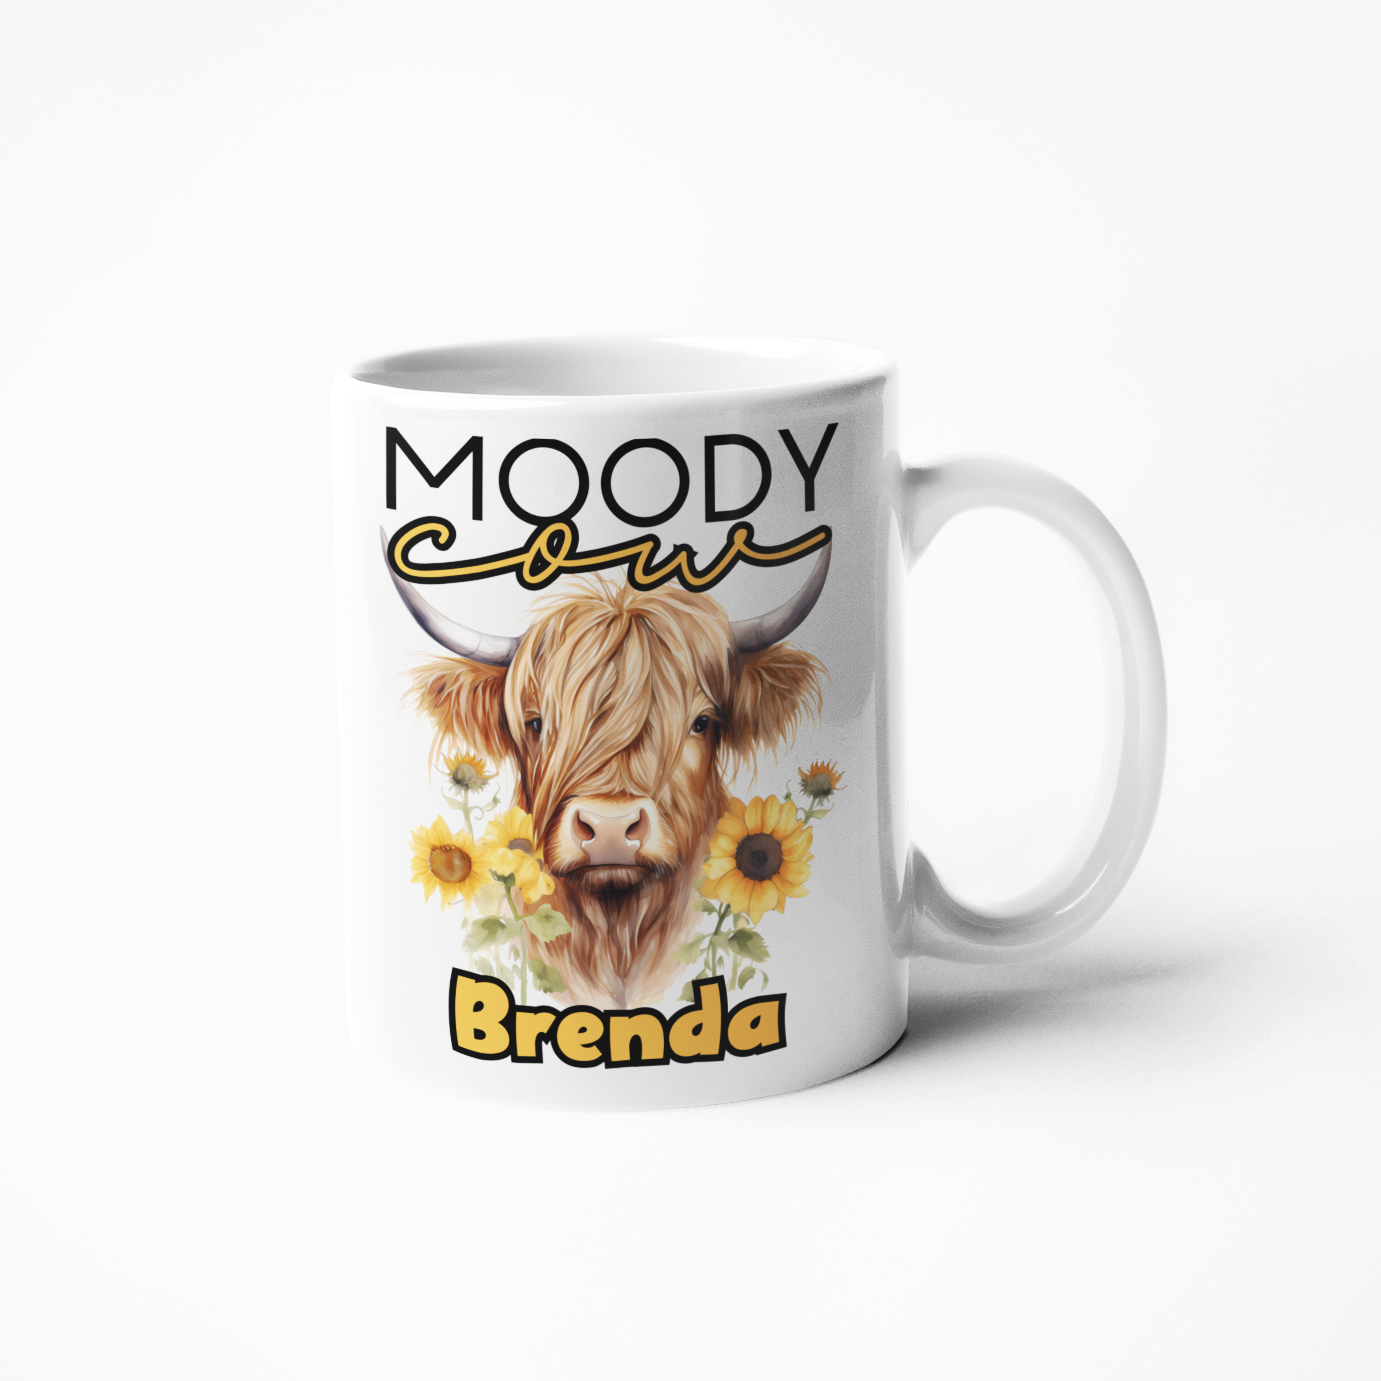 moody highland cow personalised mug with any name gift for birthday or Christmas